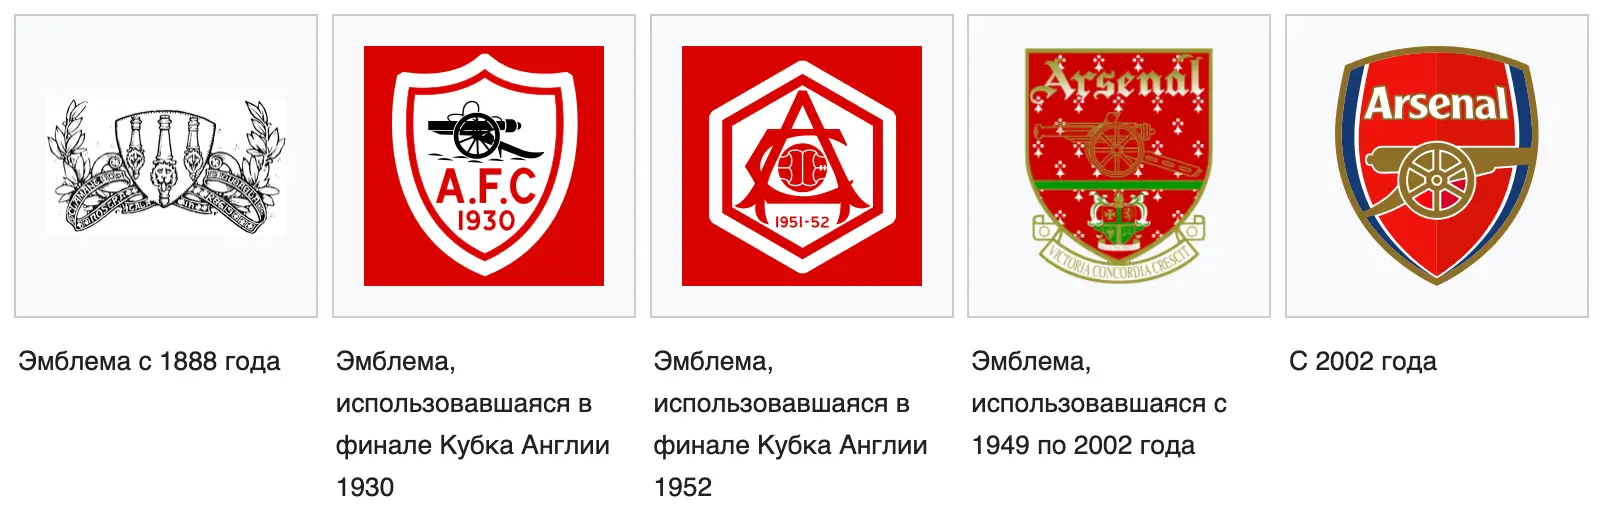 История логотипов Арсенала